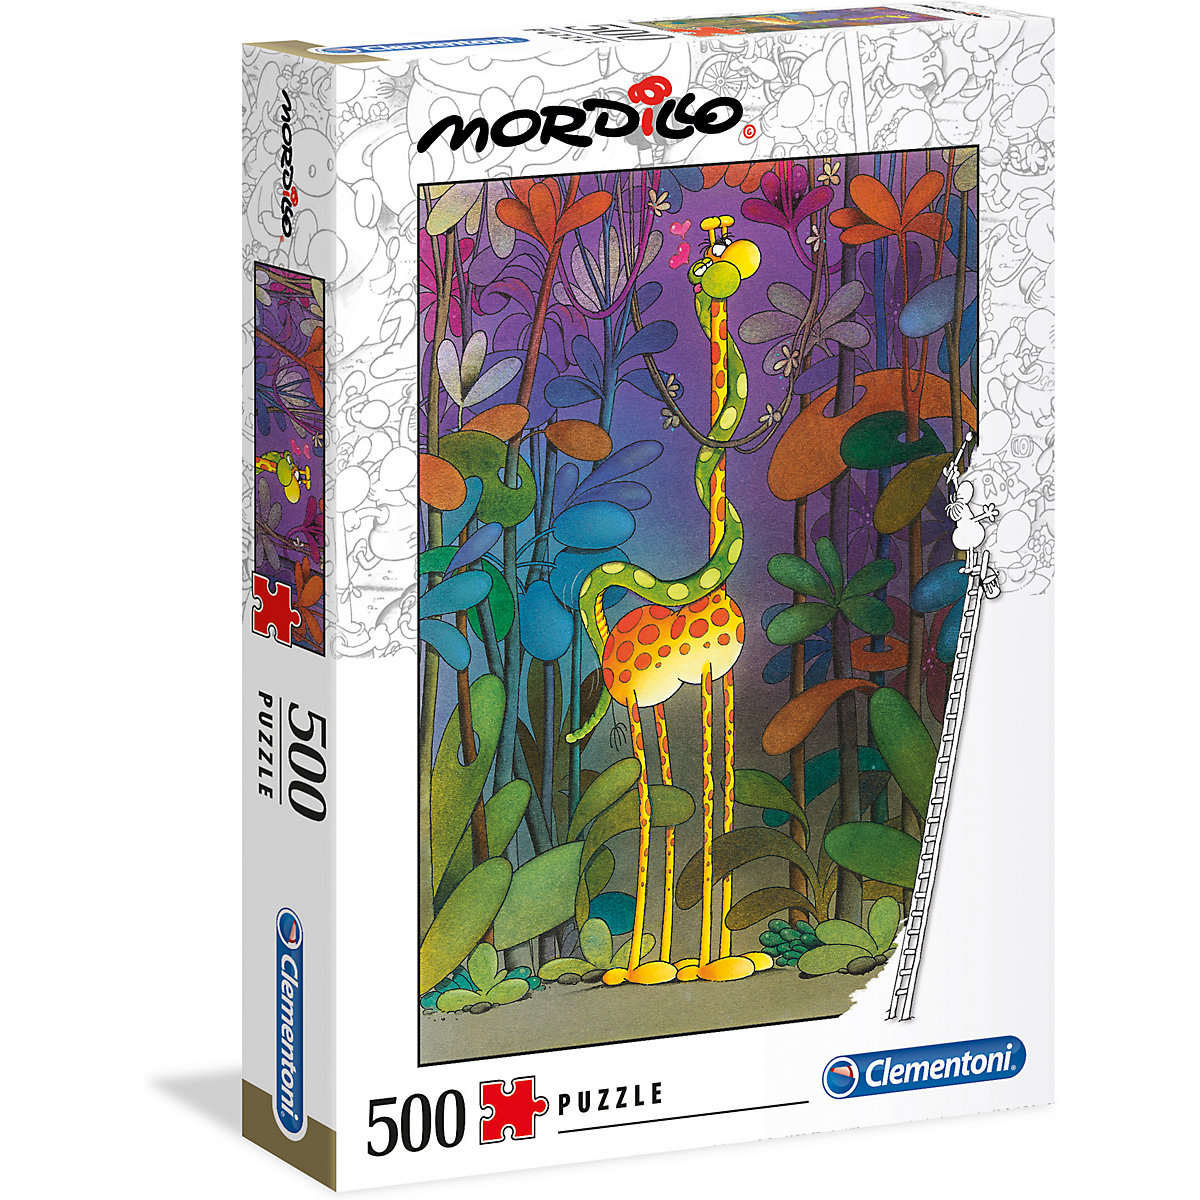 Clementoni Puzzle 500 Teile Mordillo Collection Der Lover